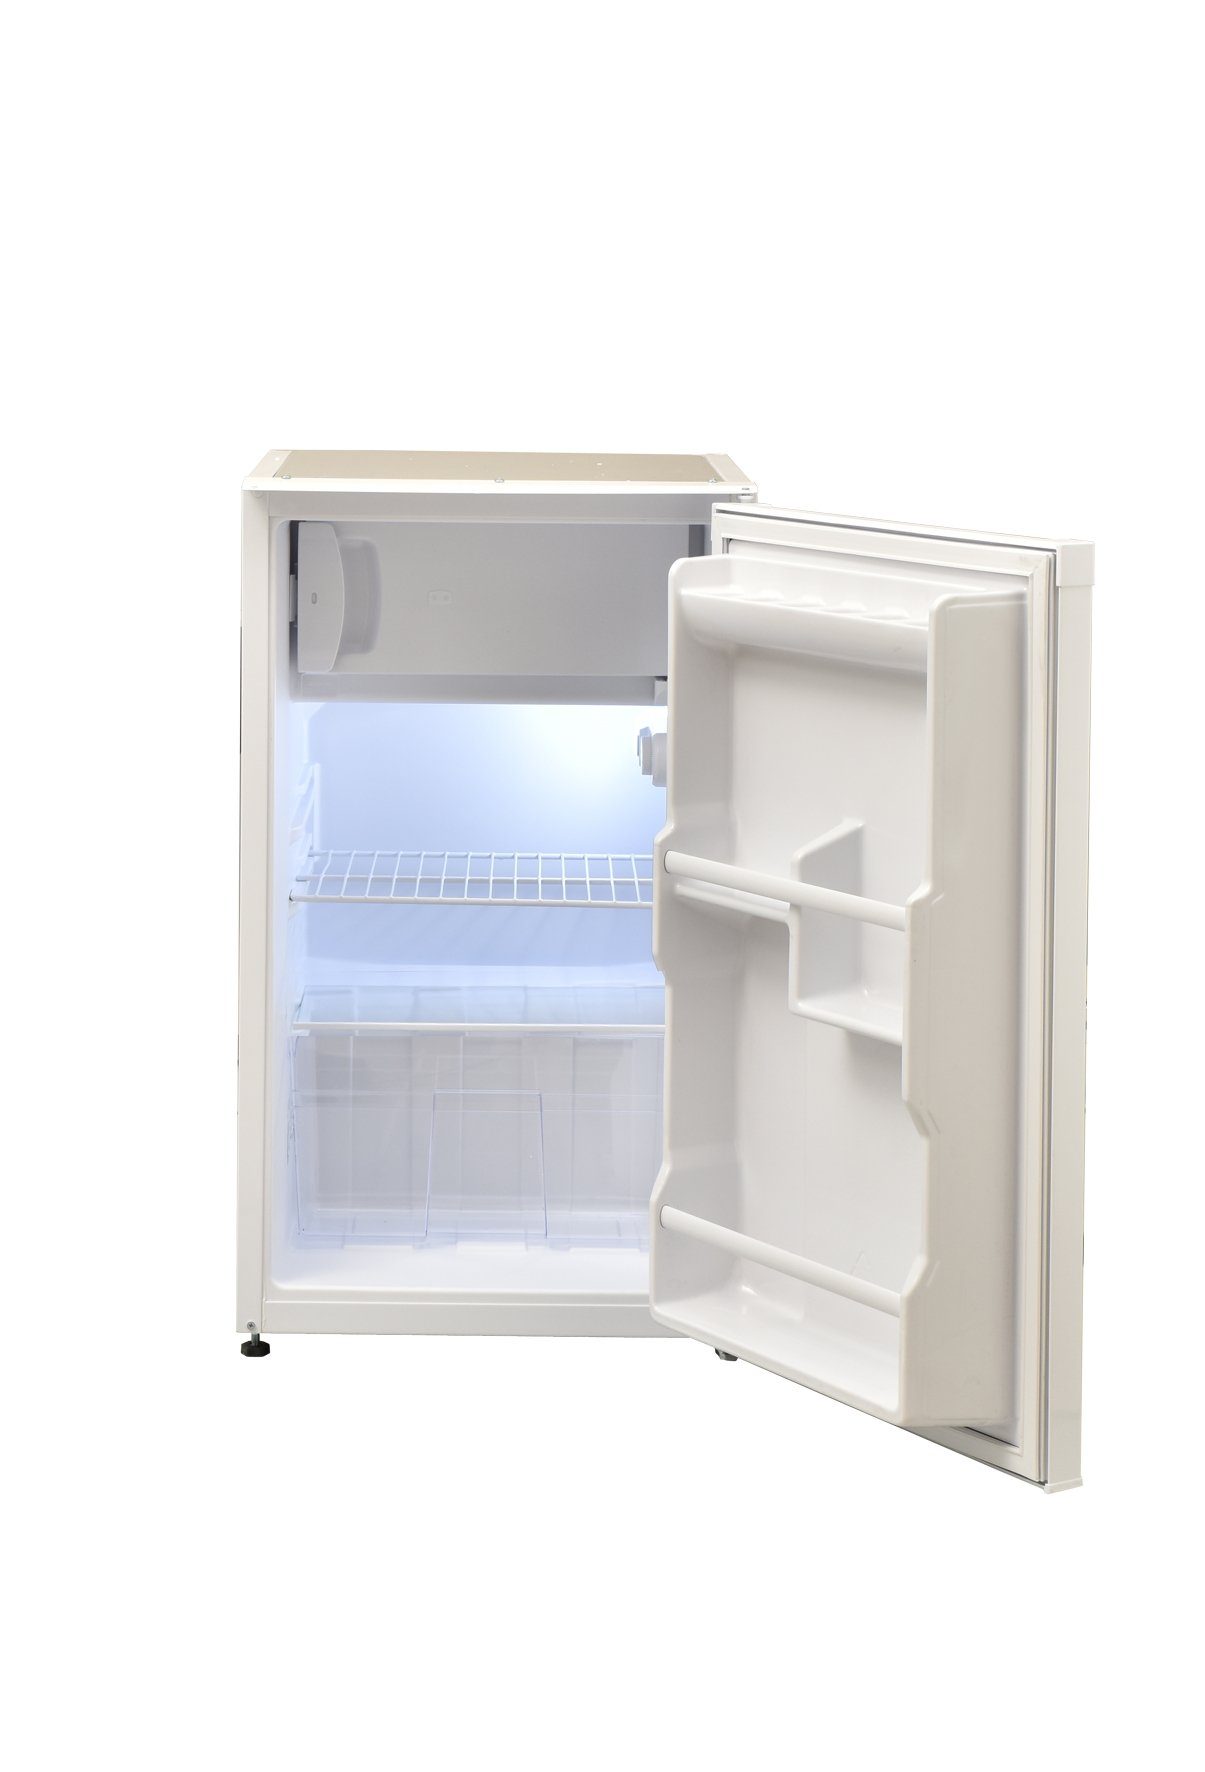 RESPEKTA Unterbaufähig KSU50 Gefrierfach mit Kühlschrank